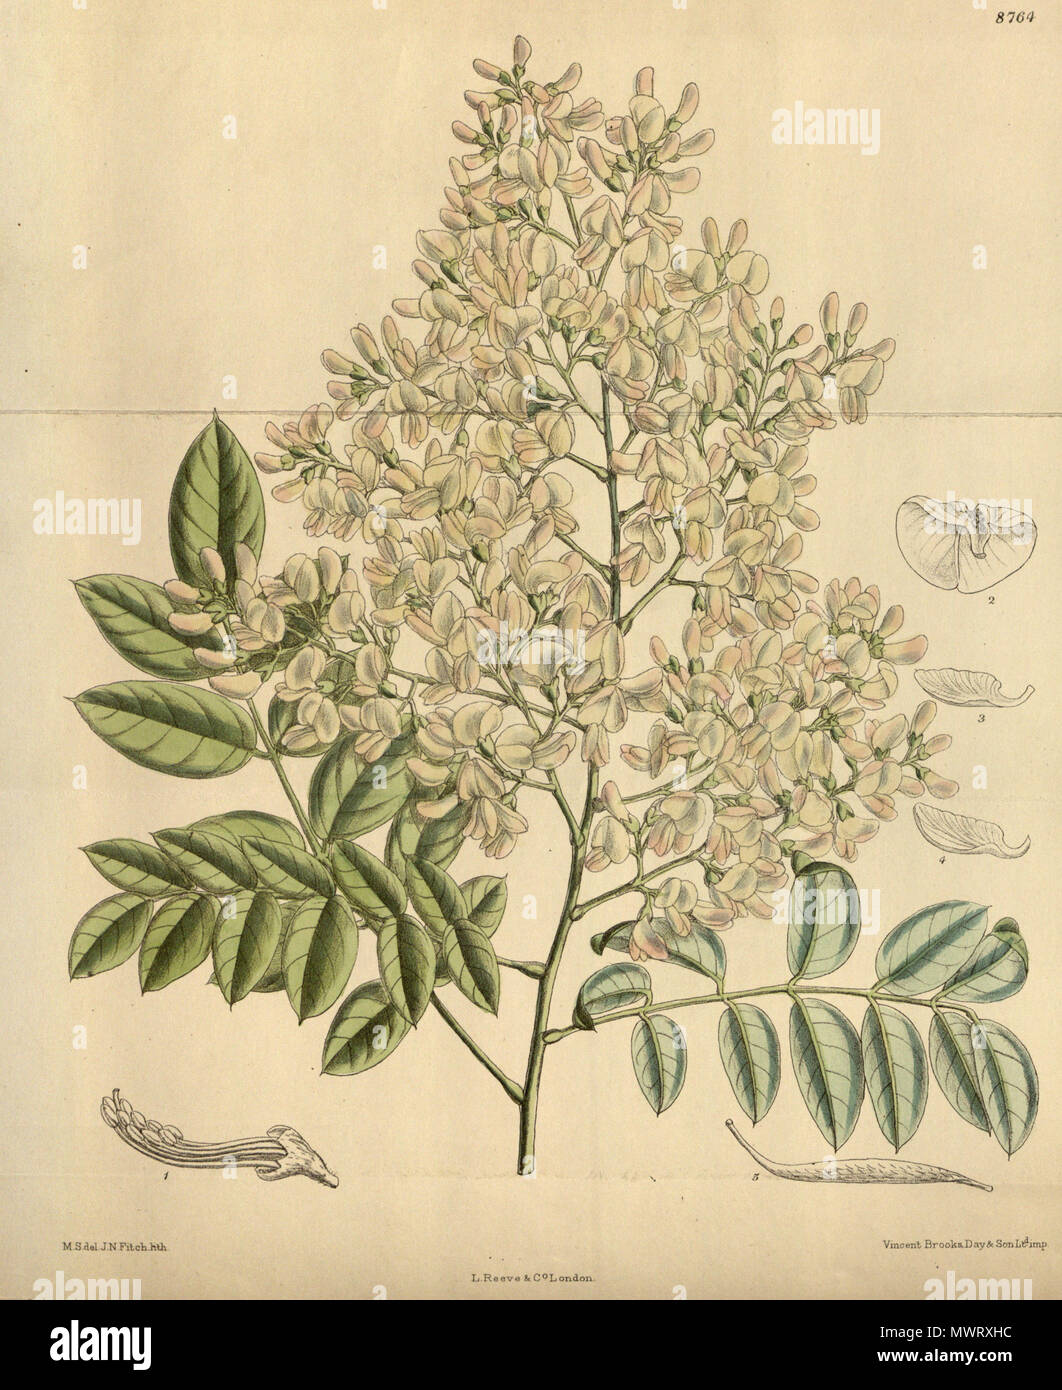 . Sophora japonica (= Styphnolobium japonicum), Fabaceae . 1918. M.S. del., J.N.Fitch lith. 568 Sophora japonica 144-8764 Stock Photo